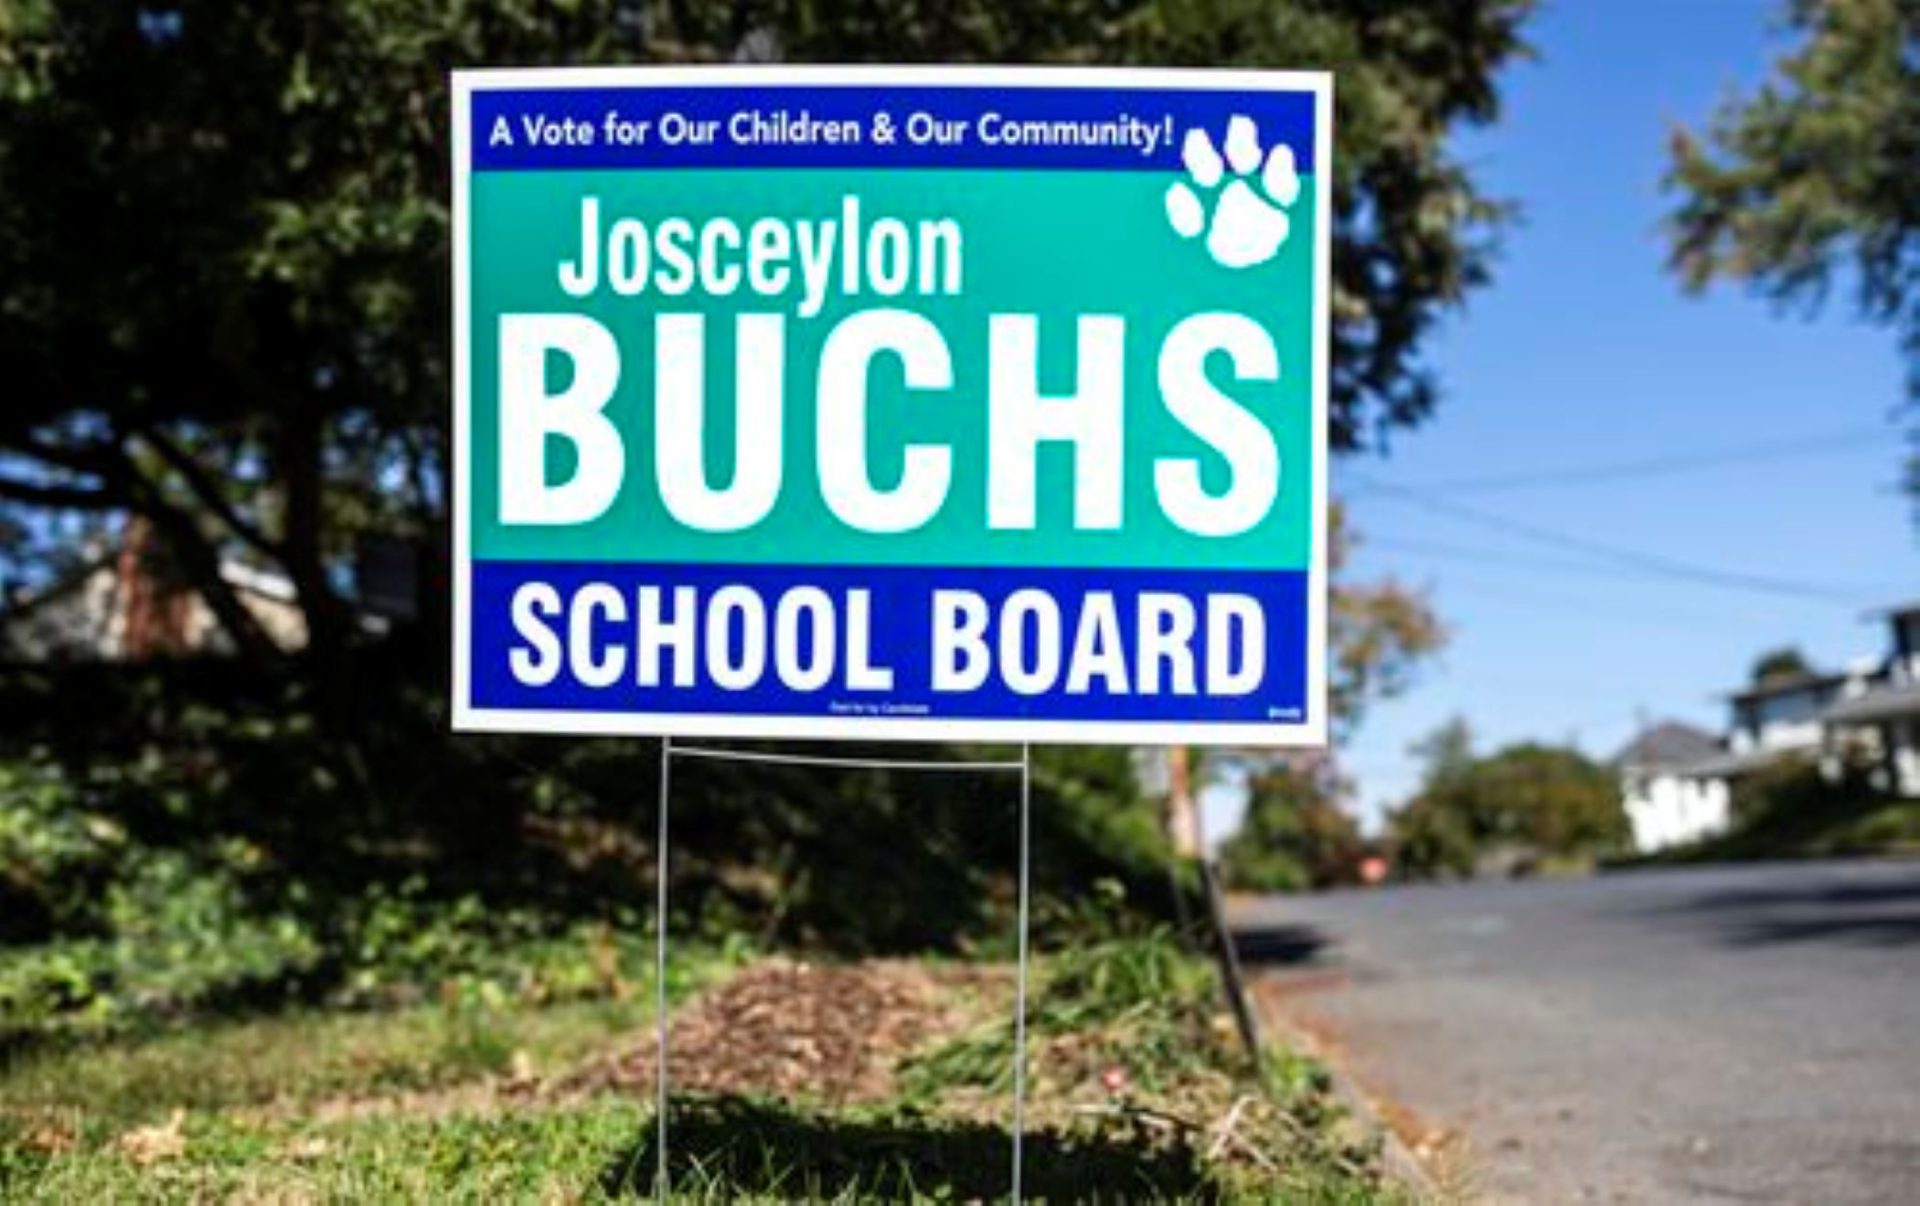 Camp Hill school board aspirant Josceylon Buchs says she was not prepared for the volatility of the local race.